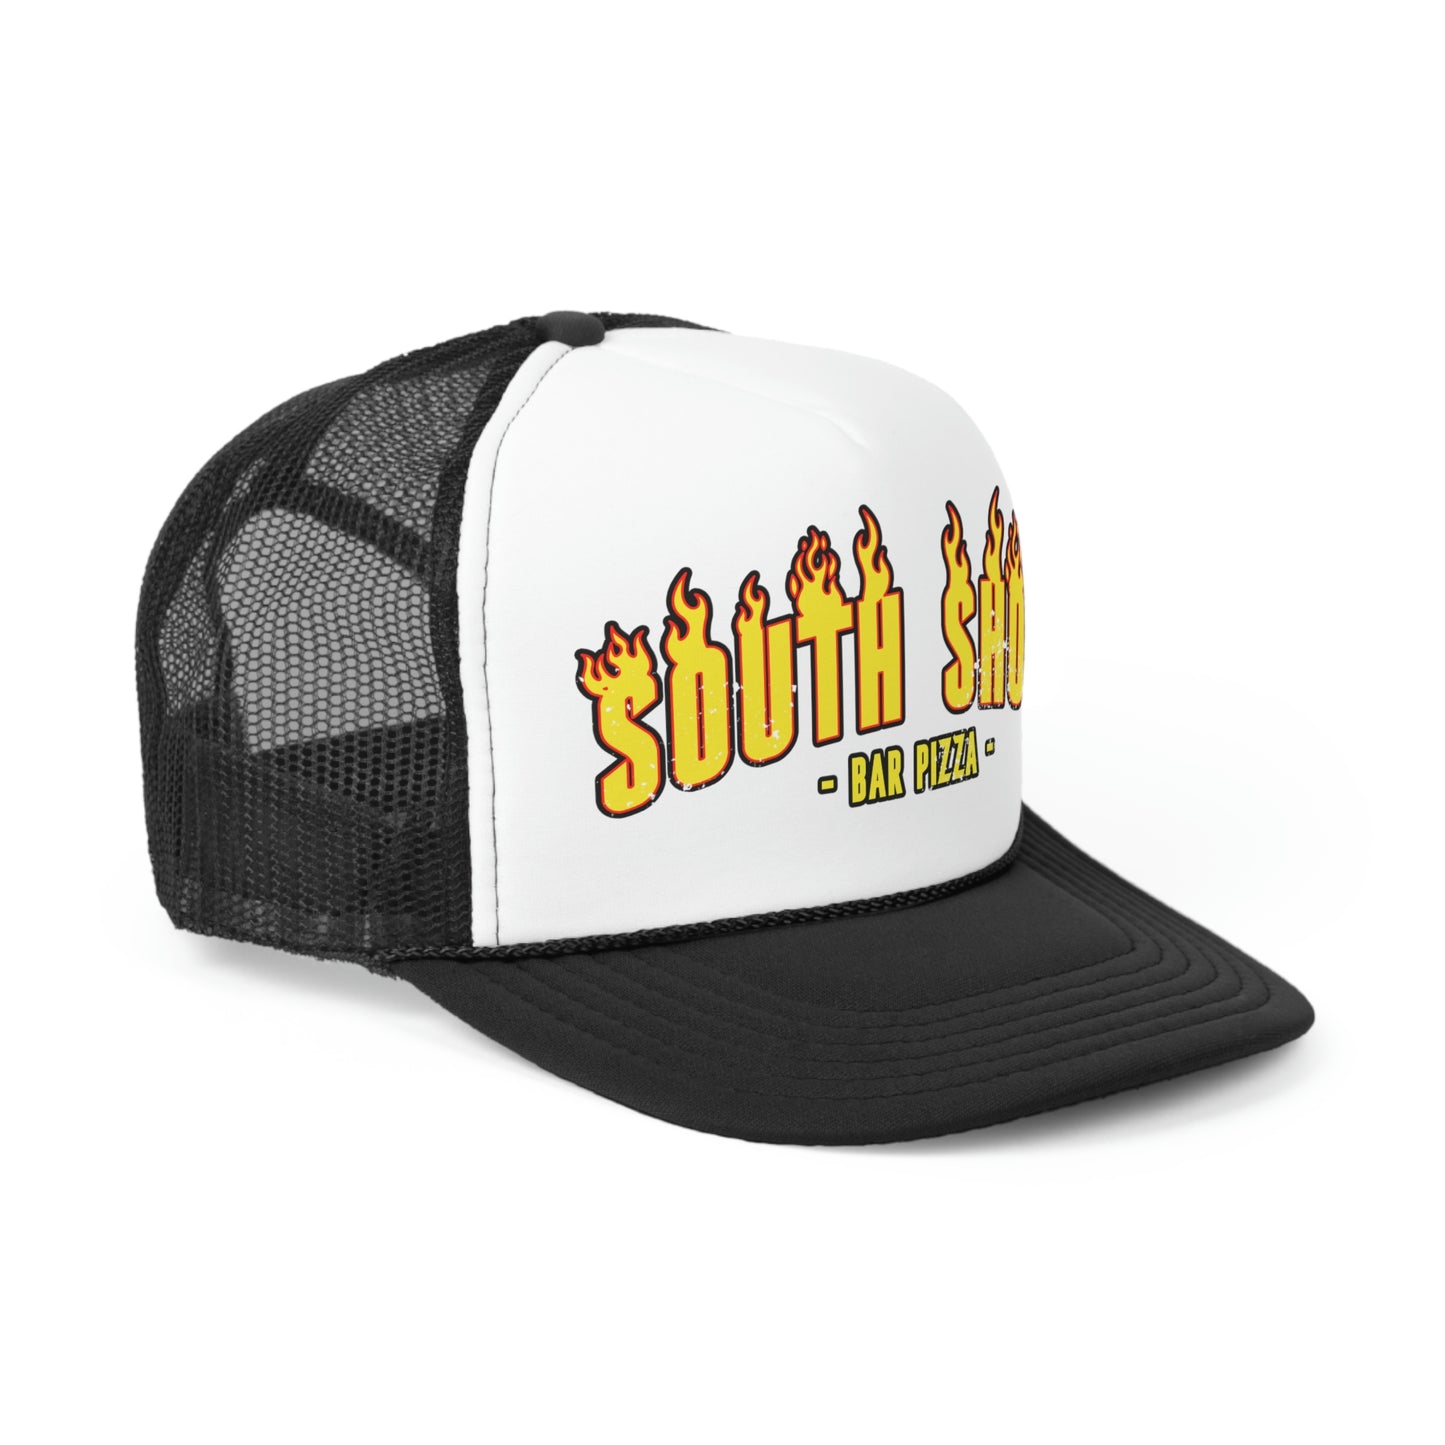 South Shore Bar Pizza Trucker Hat